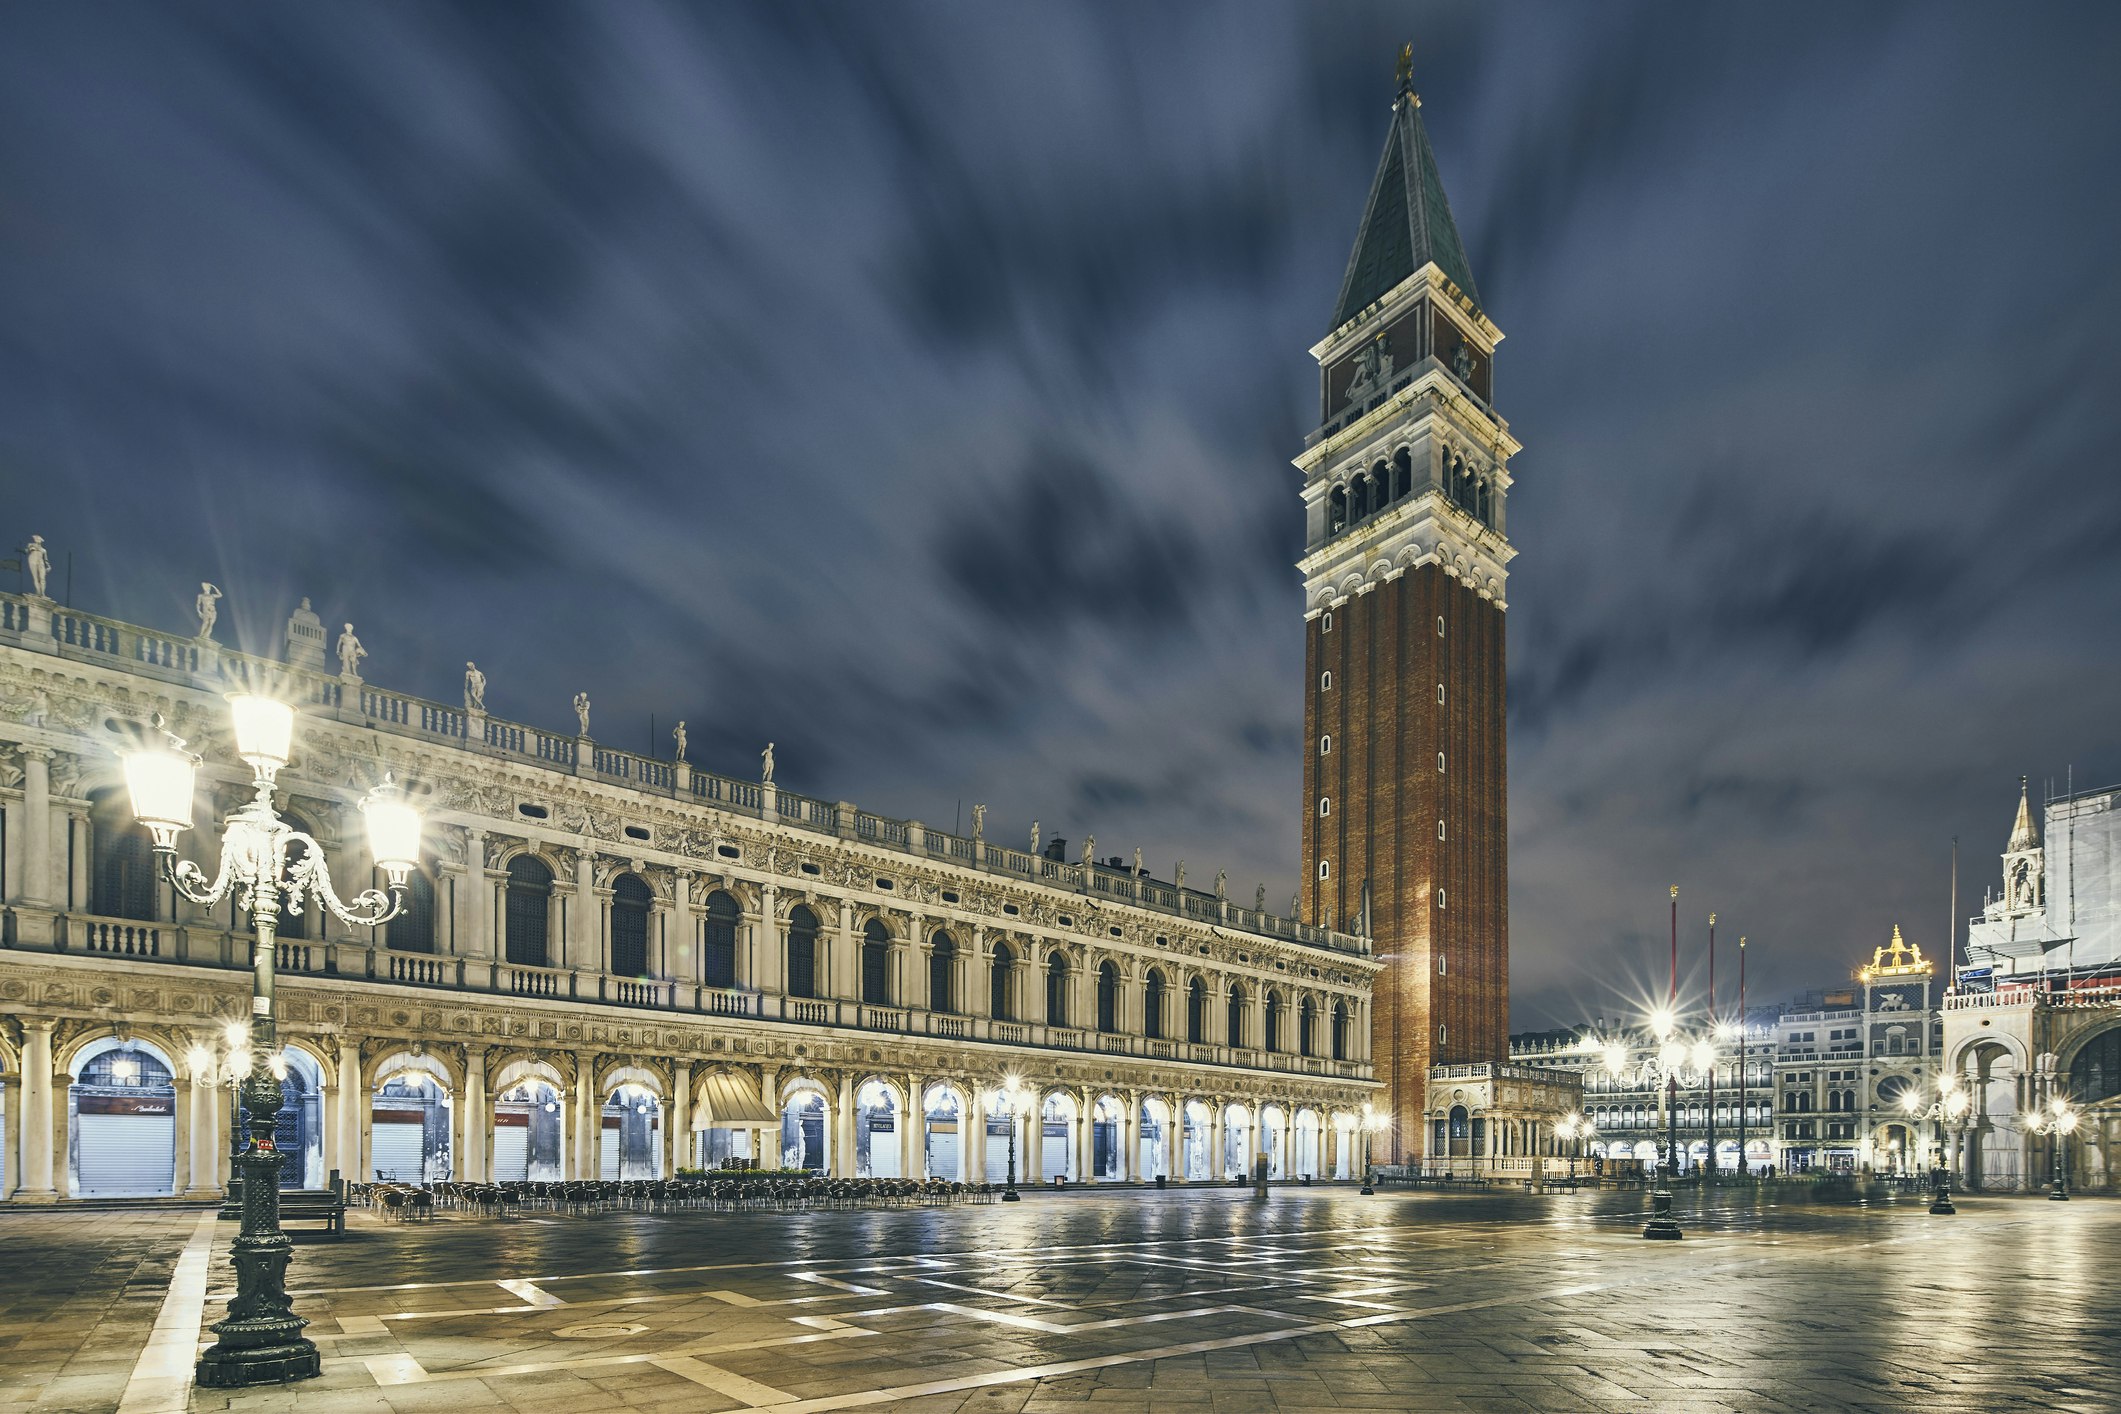 St Mark's campanile and the Biblioteca Nazionale Marciana at night